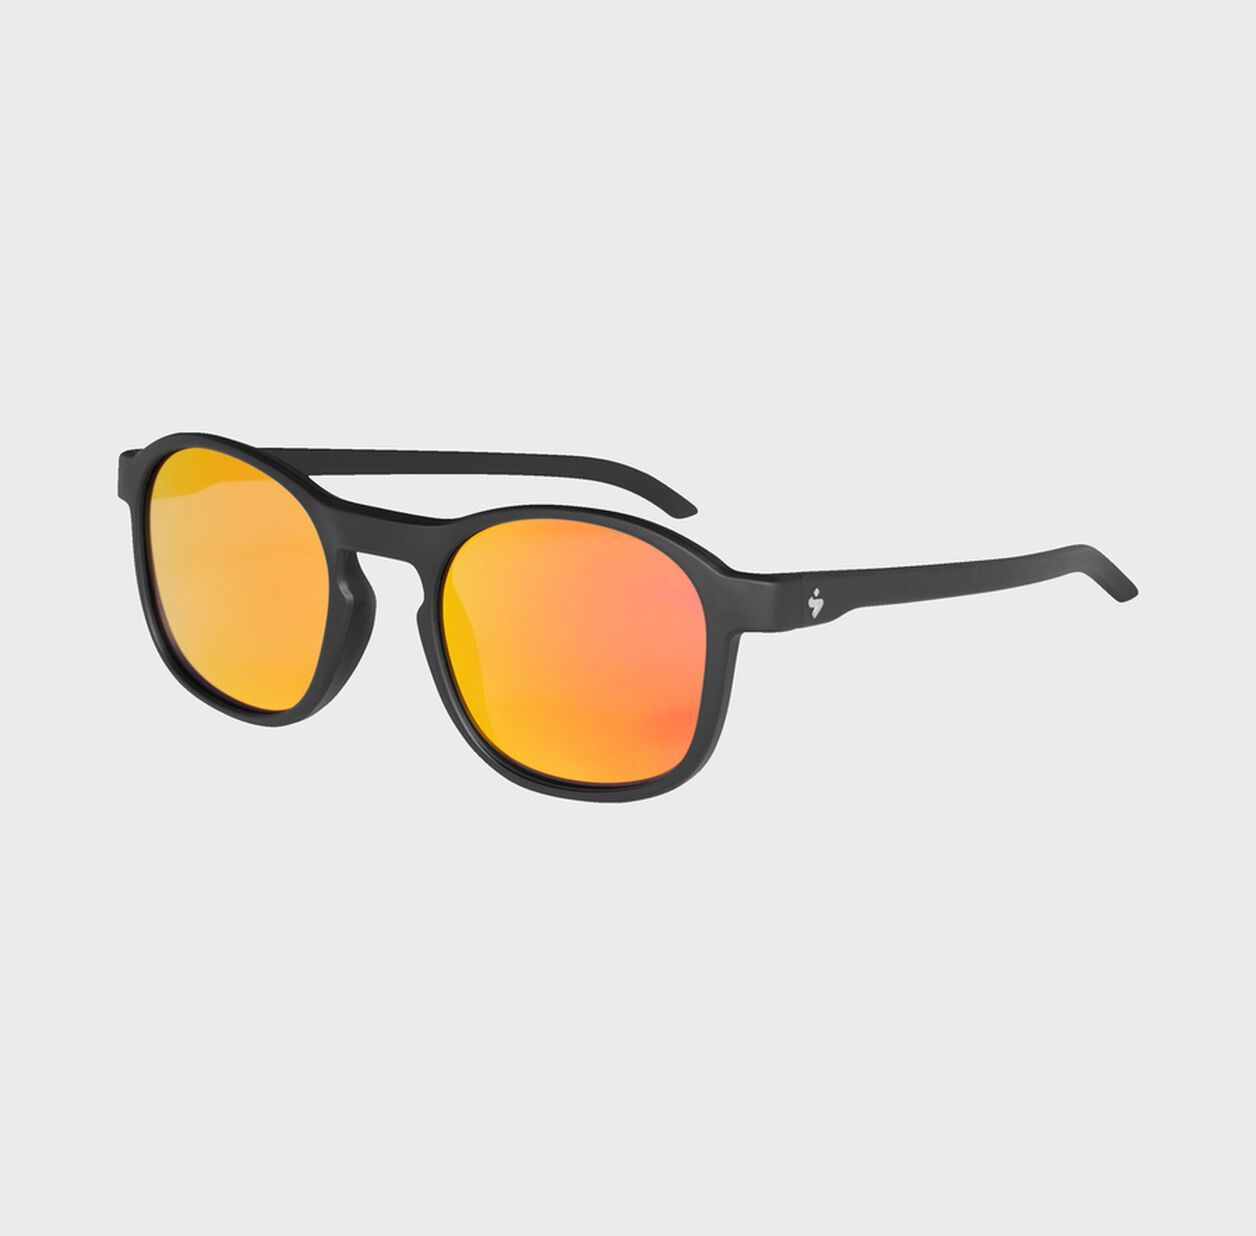 Sunglasses Heat Rig Reflect Sunglasses Sweet Protection 